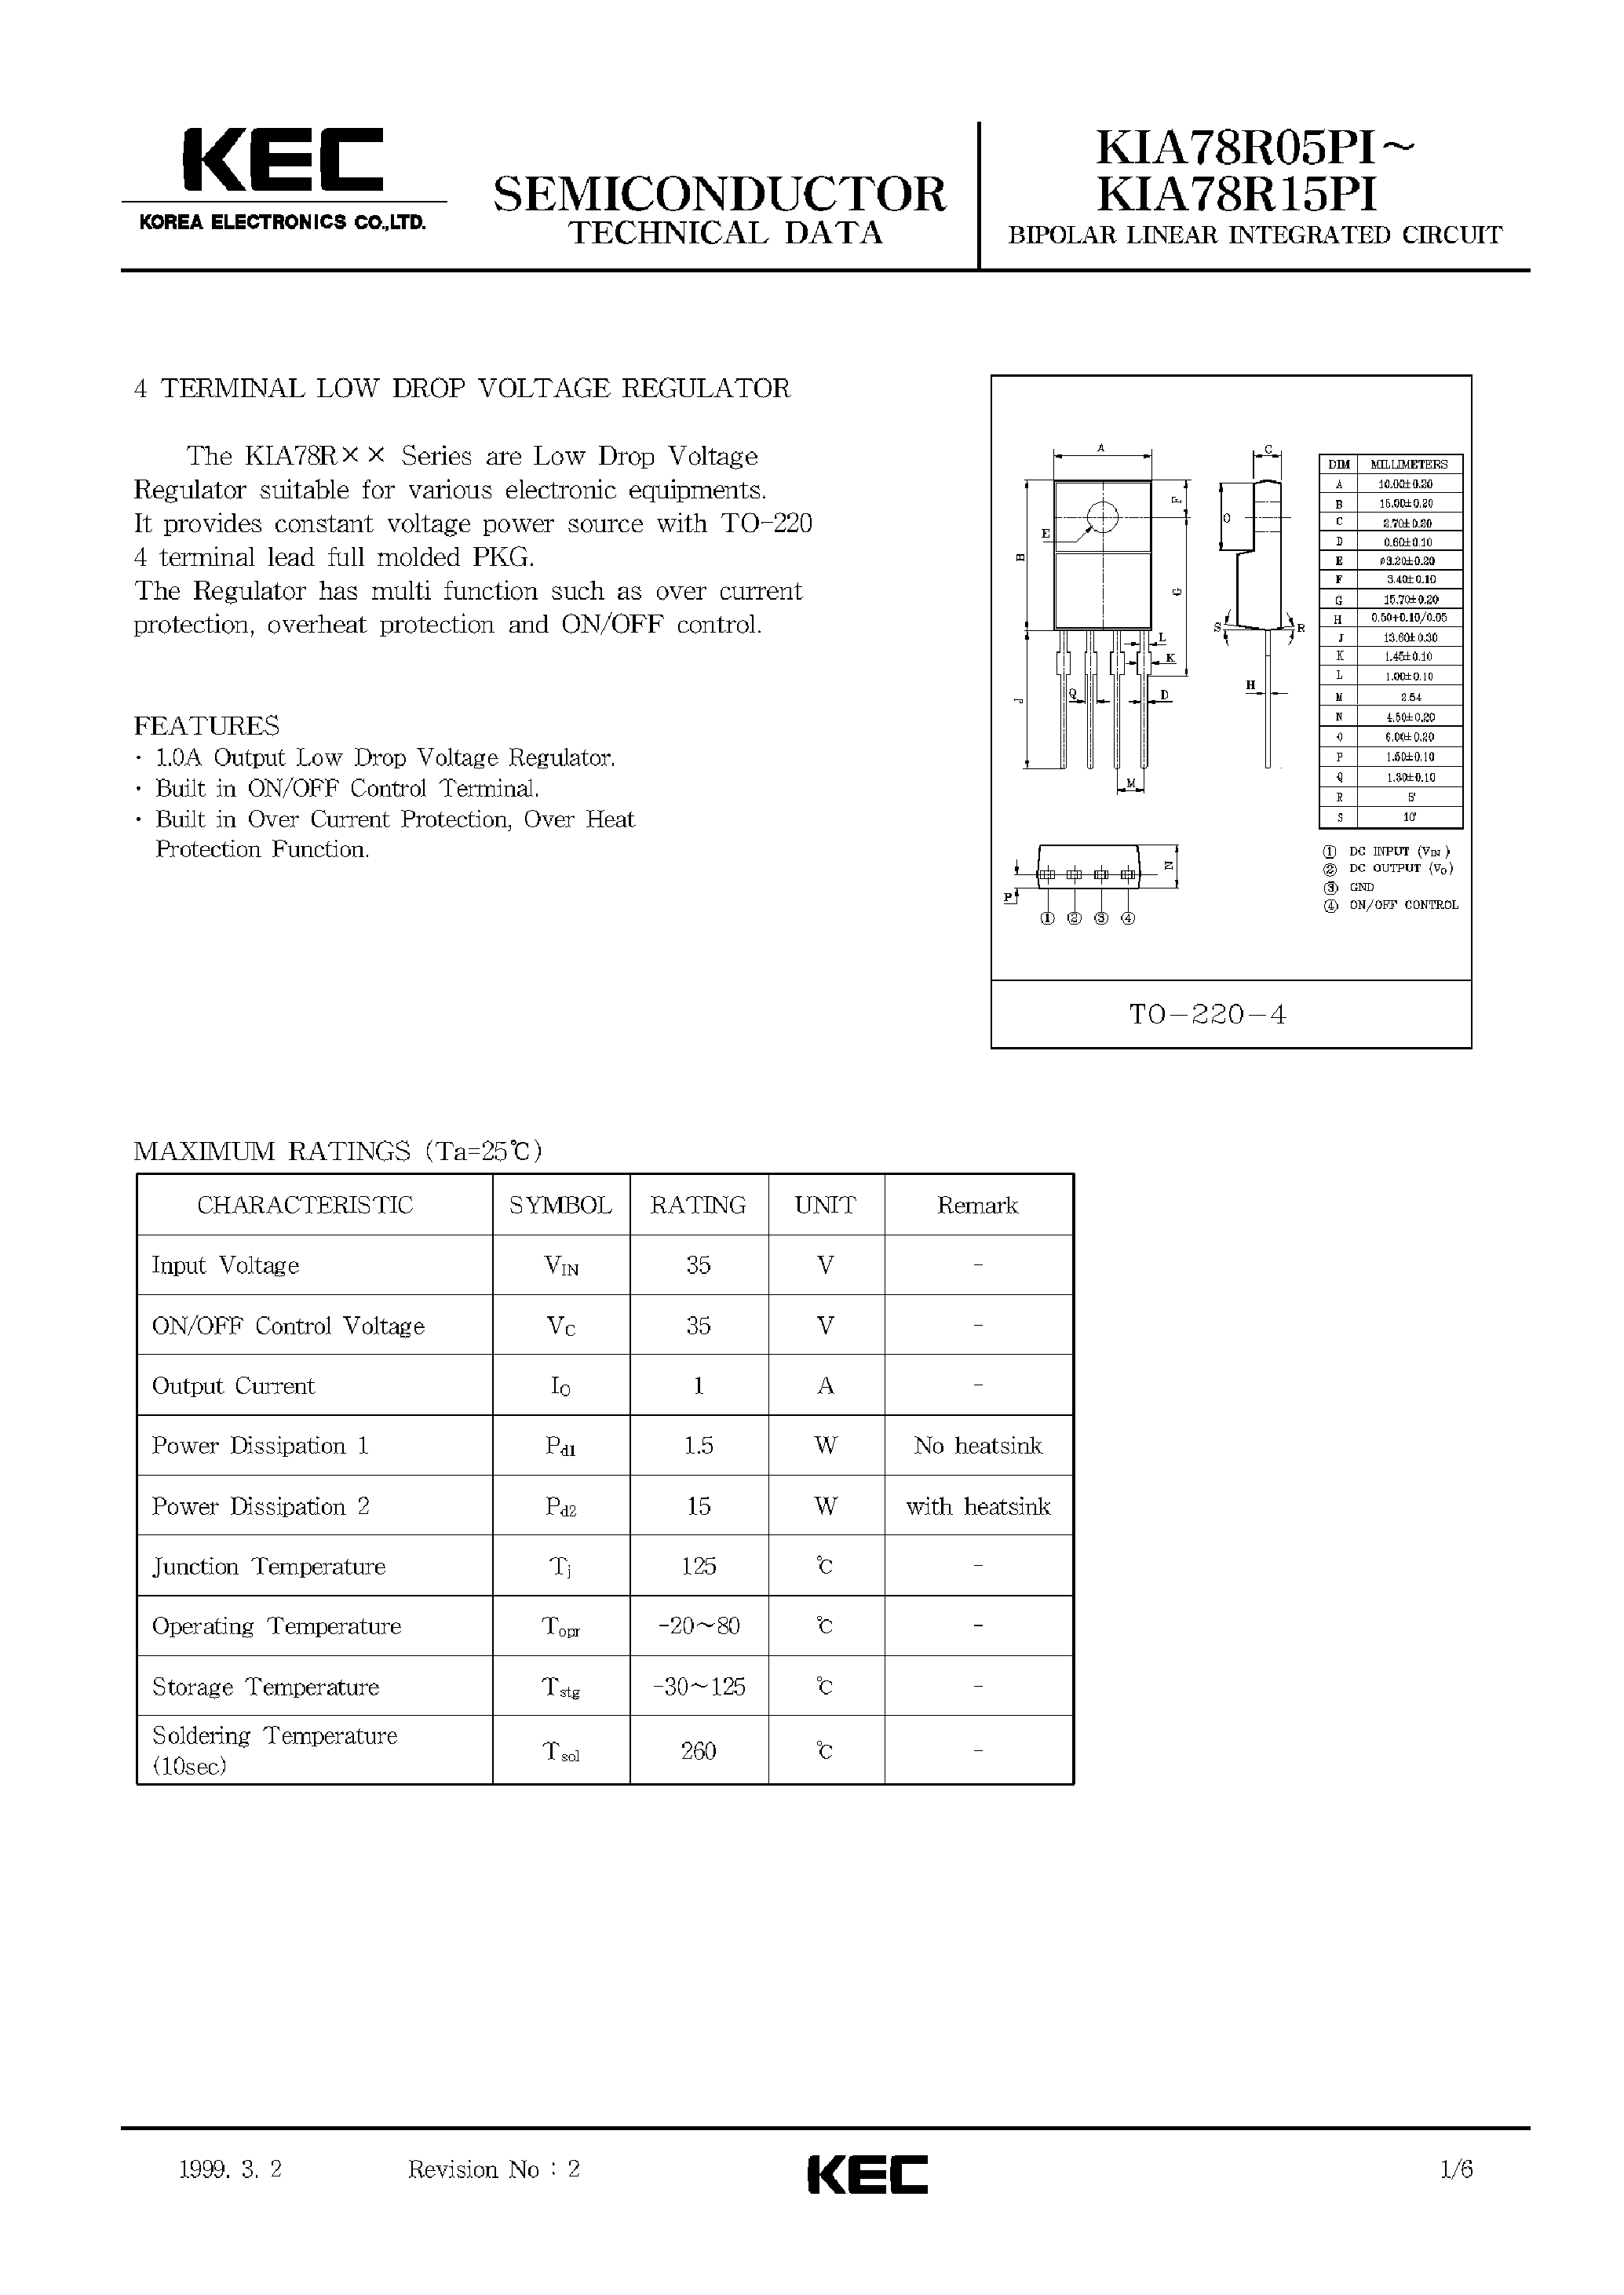 Datasheet KIA78R09PI - BIPOLAR LINEAR INTEGRATED CIRCUIT (4 TERMINAL LOW DROP VOLTAGE REGULATOR) page 1